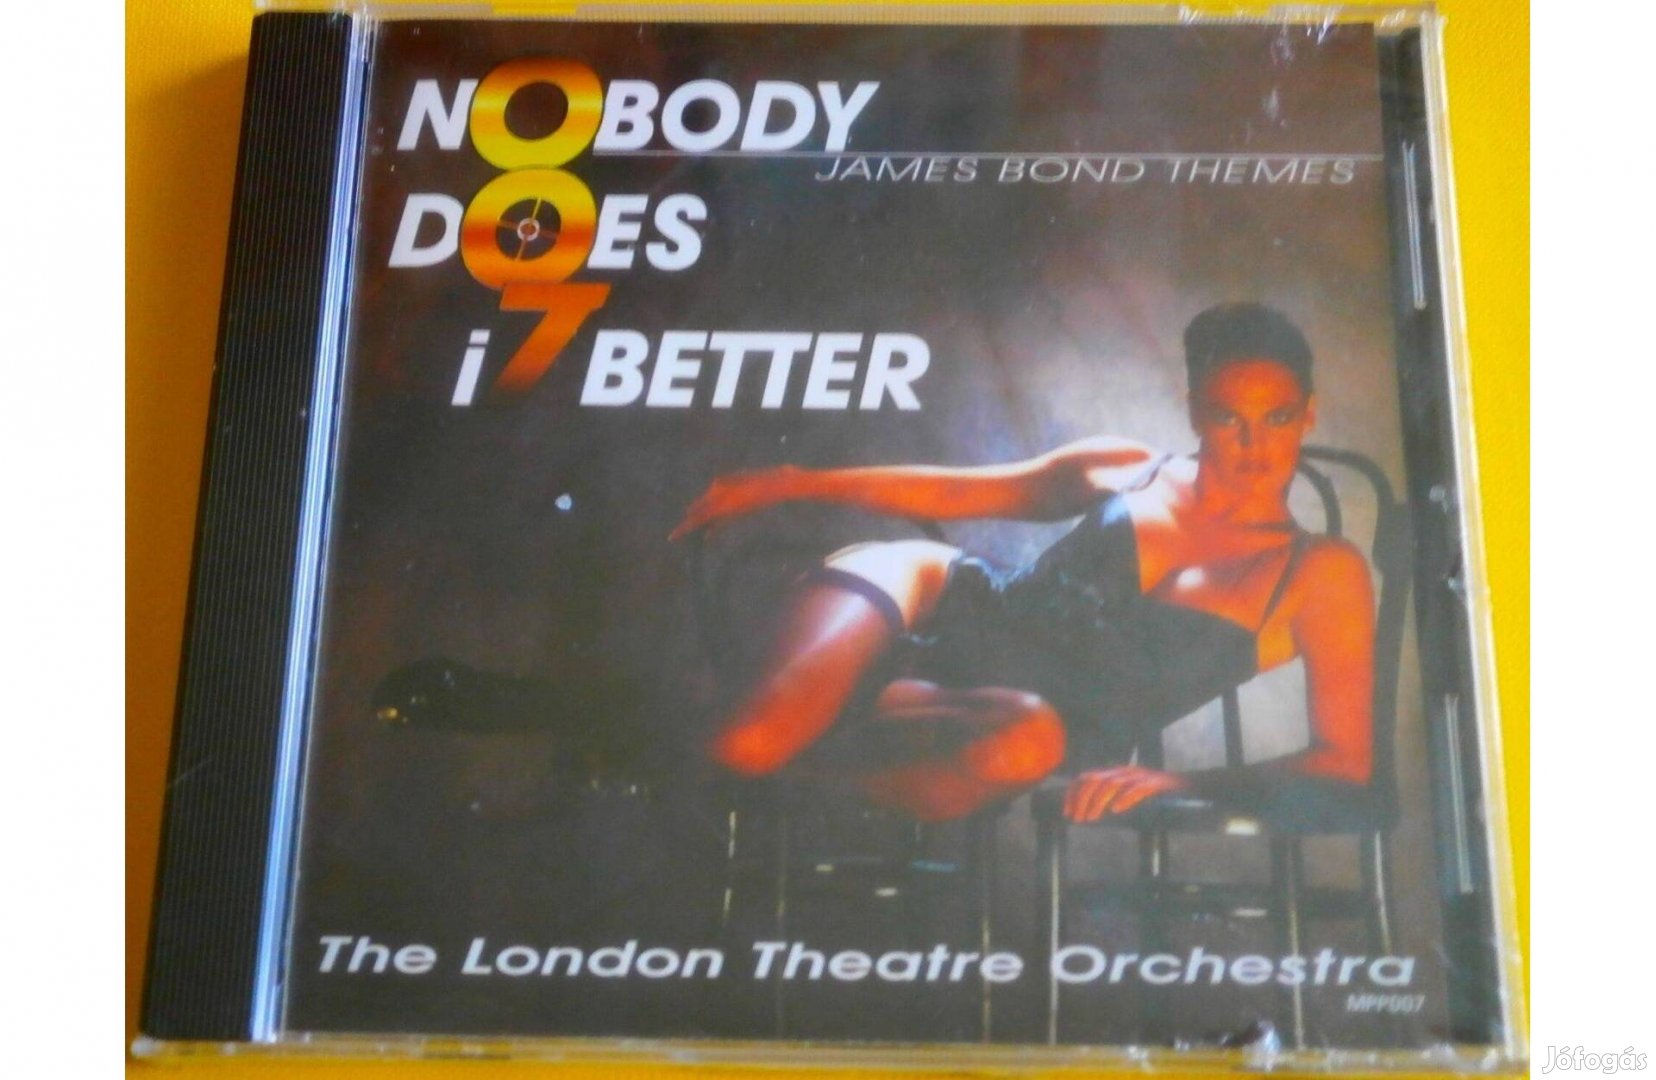 Nobody Does It Better - James Bond Themes zenei cd - Új, bontatlan